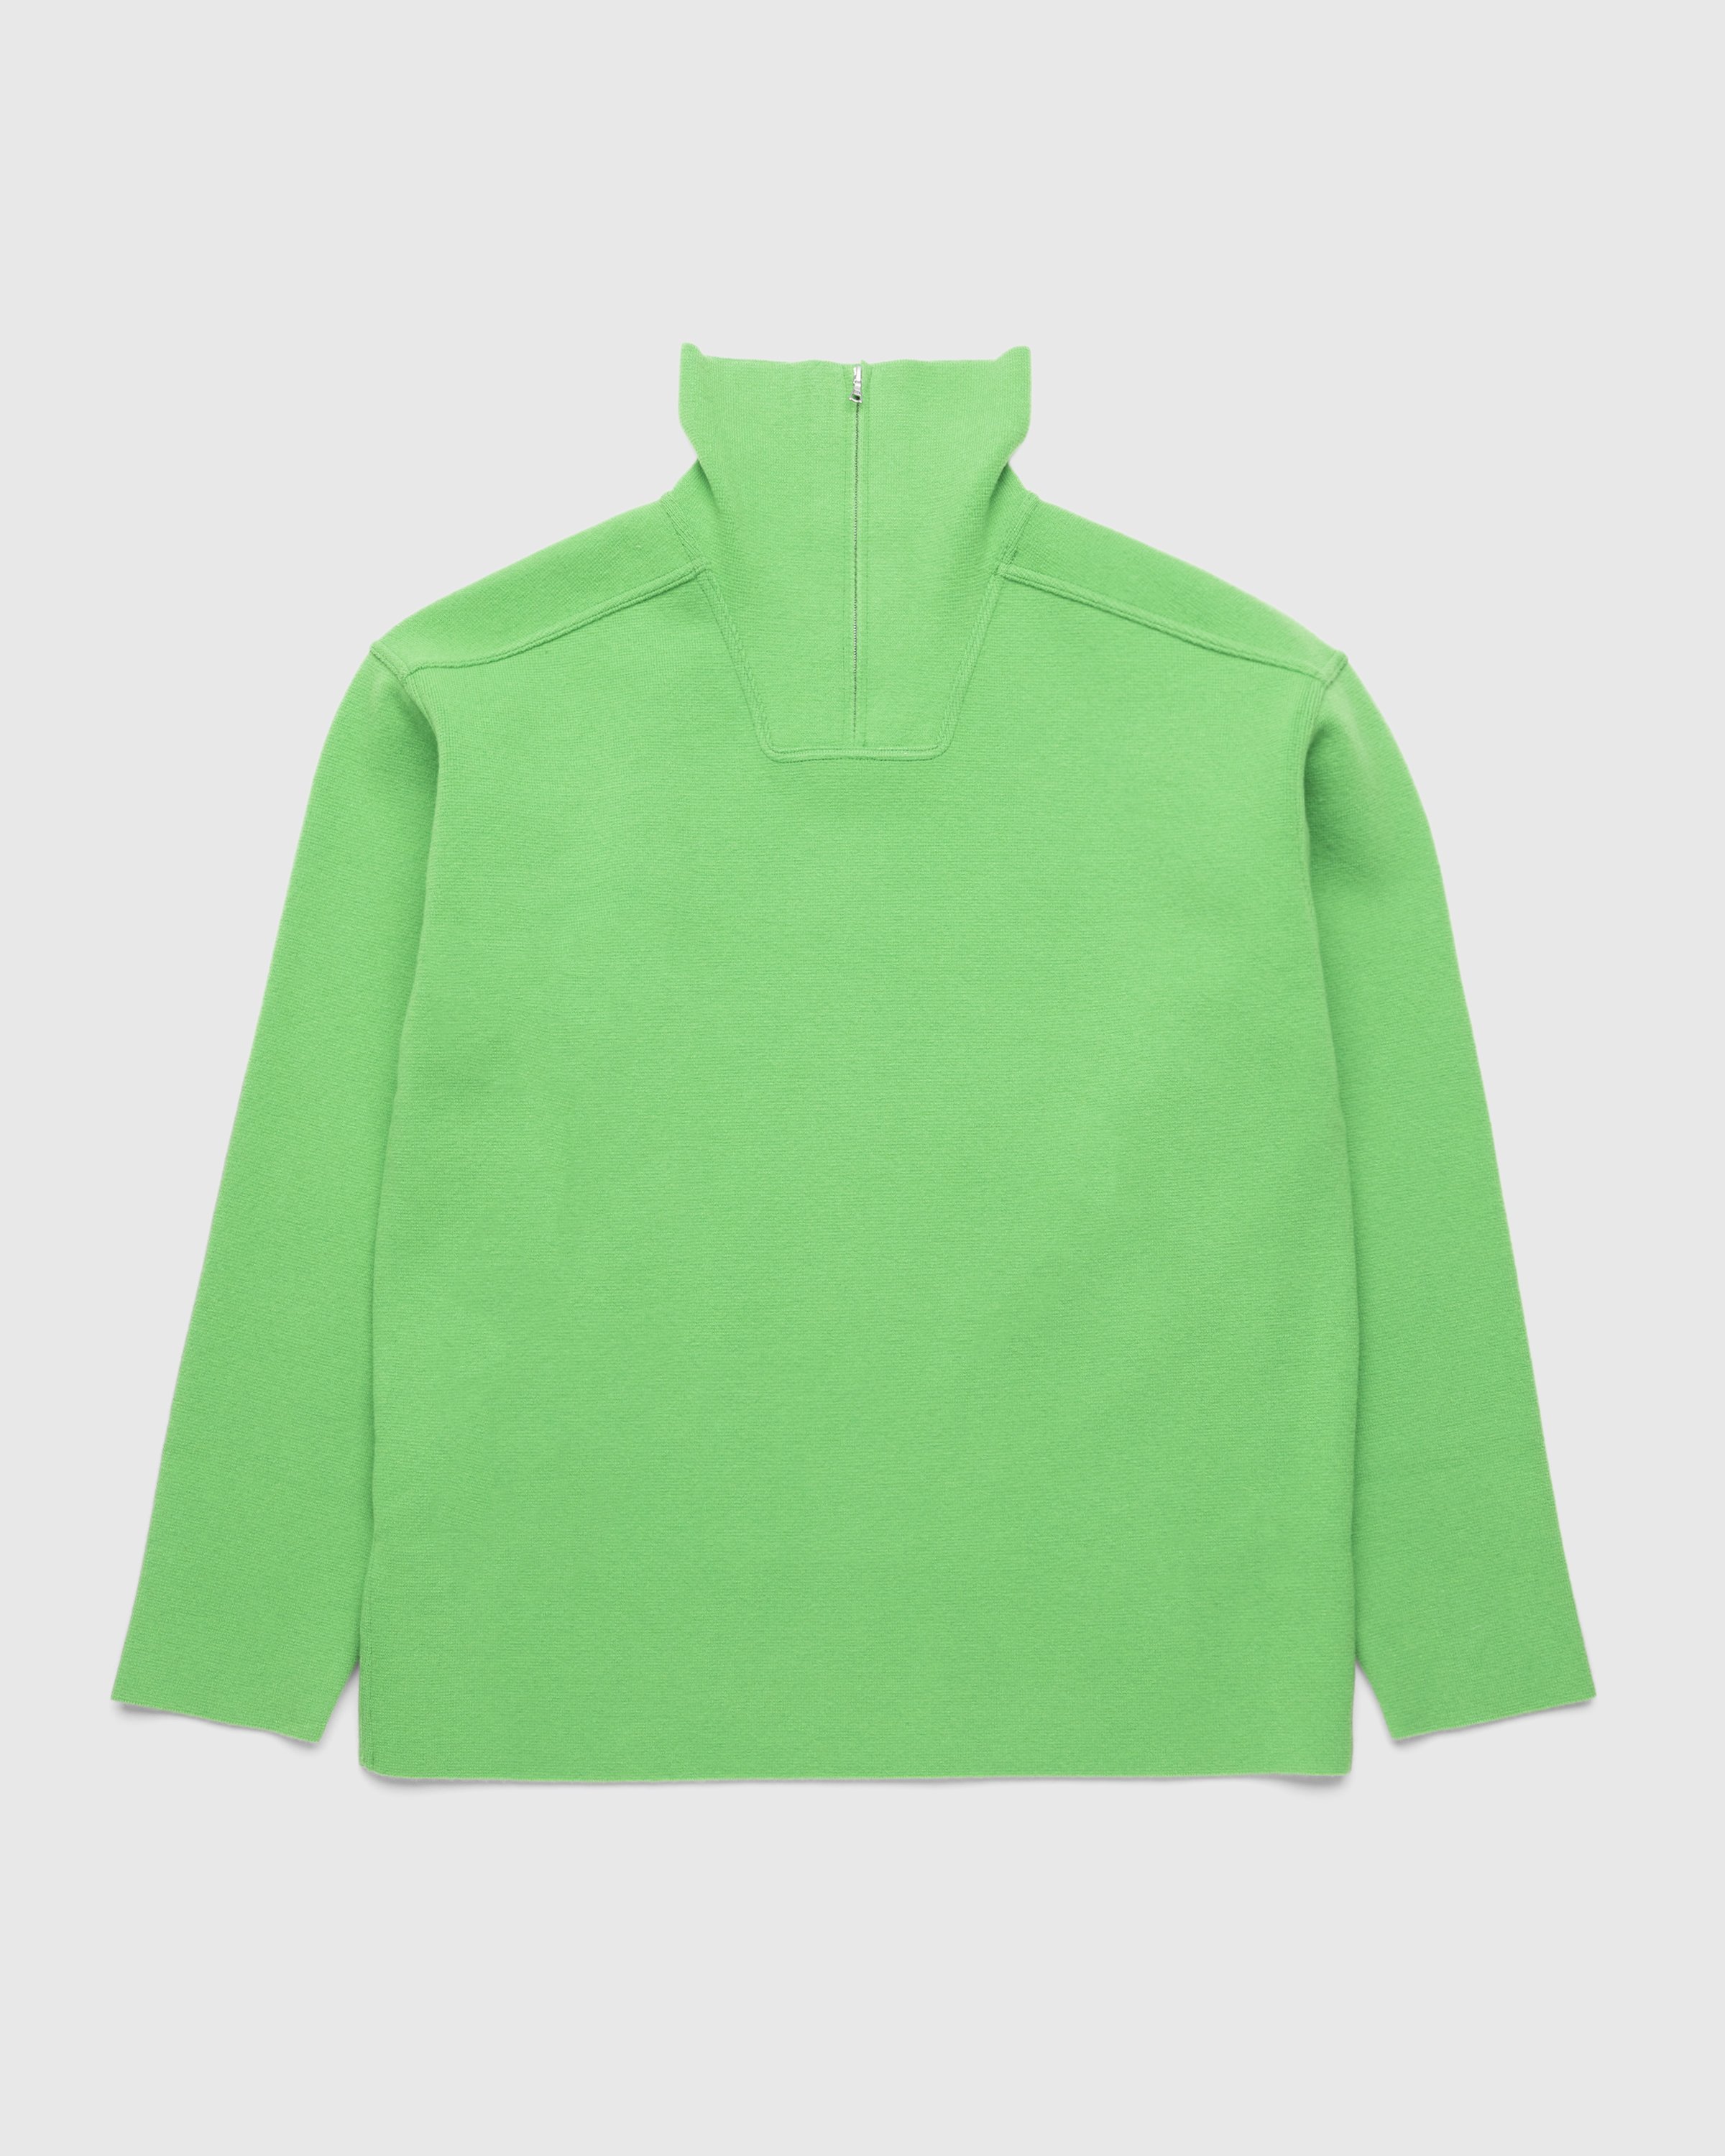 Auralee - Heavy Milano Rib Knit Zip Turtleneck Green - Clothing - Green - Image 1